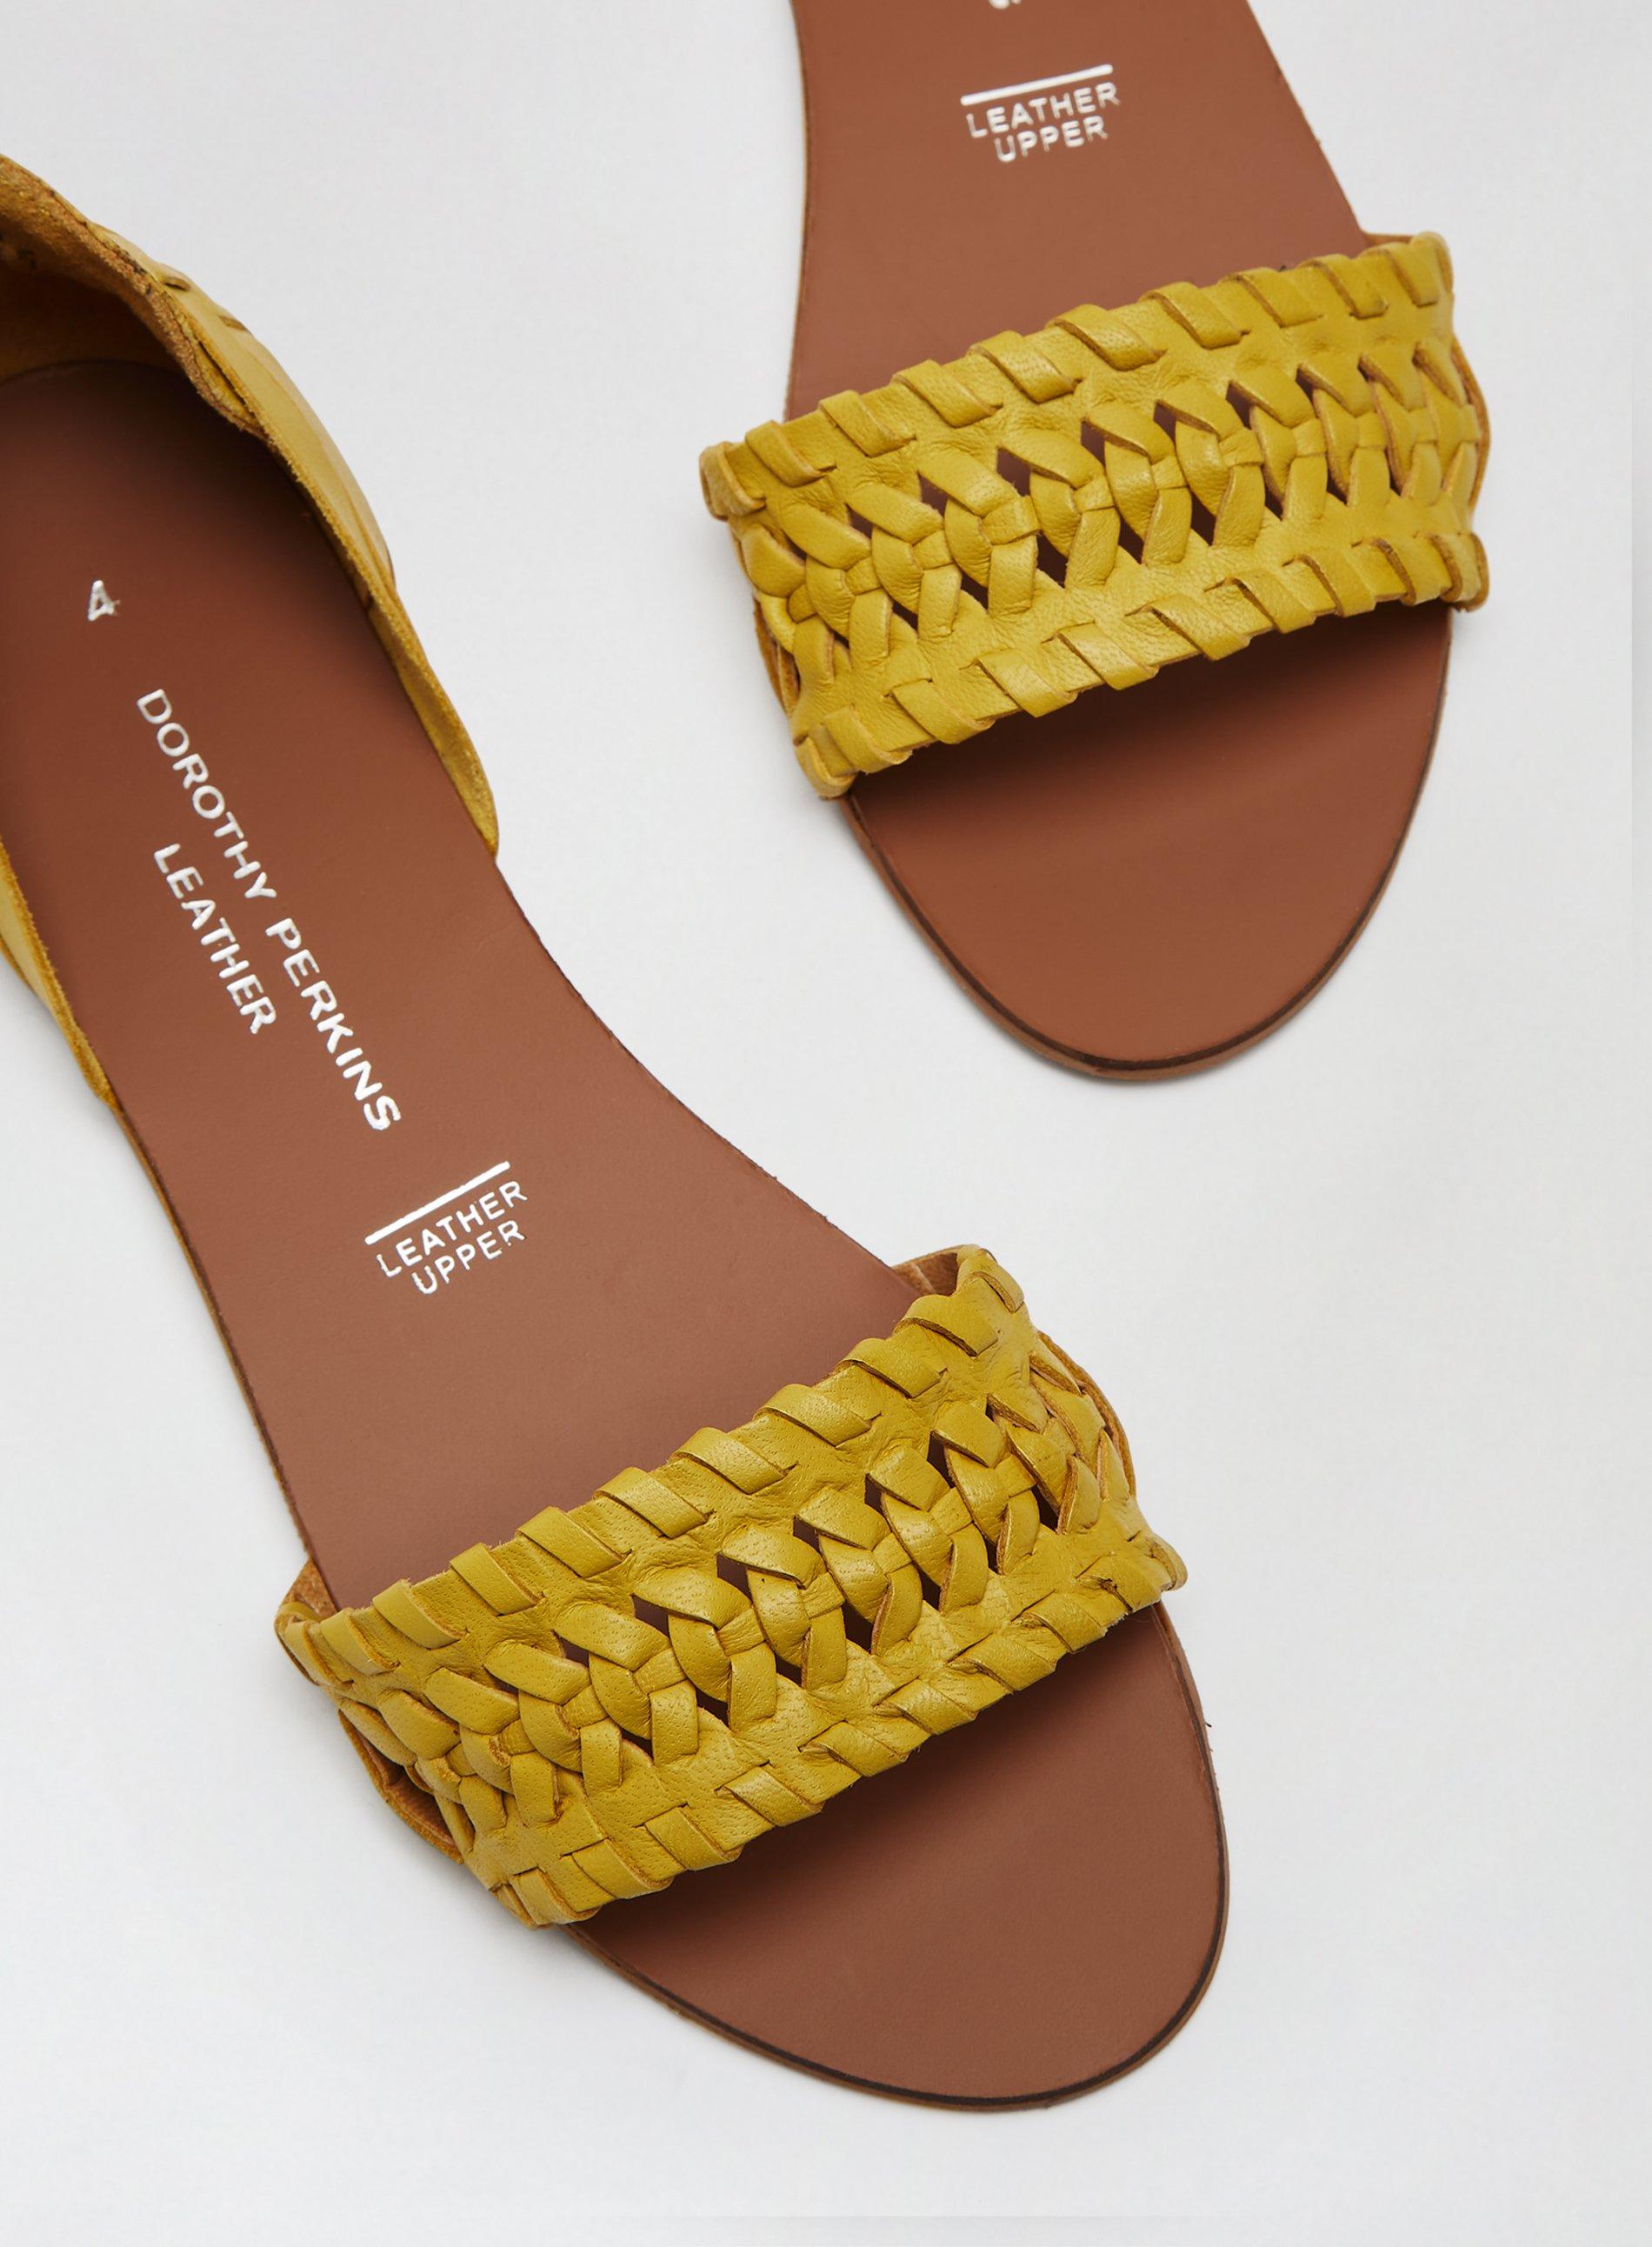 debenhams yellow sandals